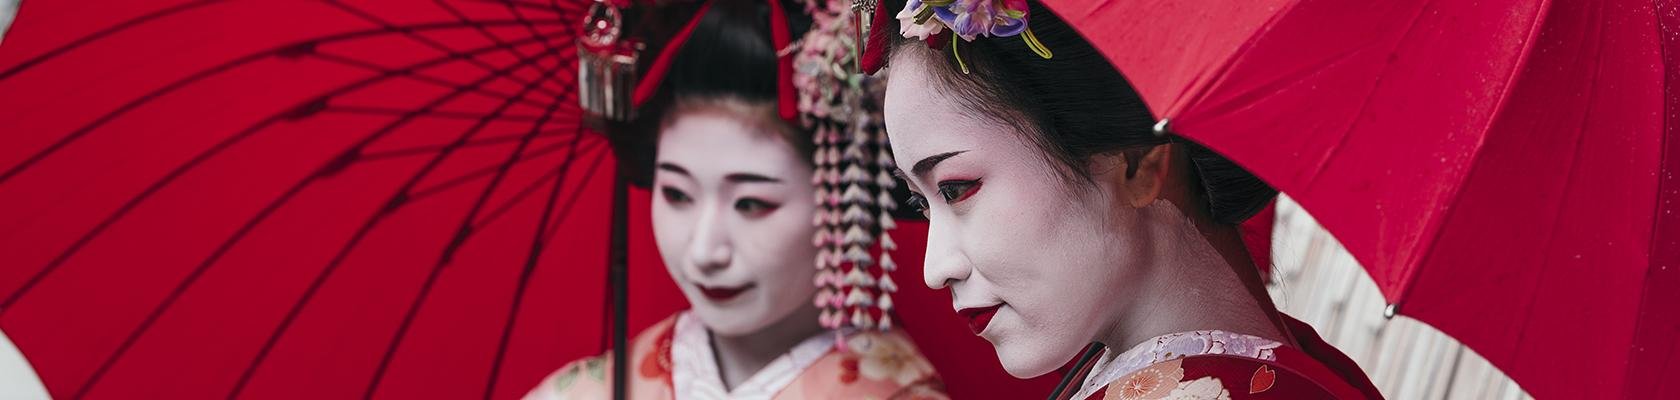 Geisha's in Japan